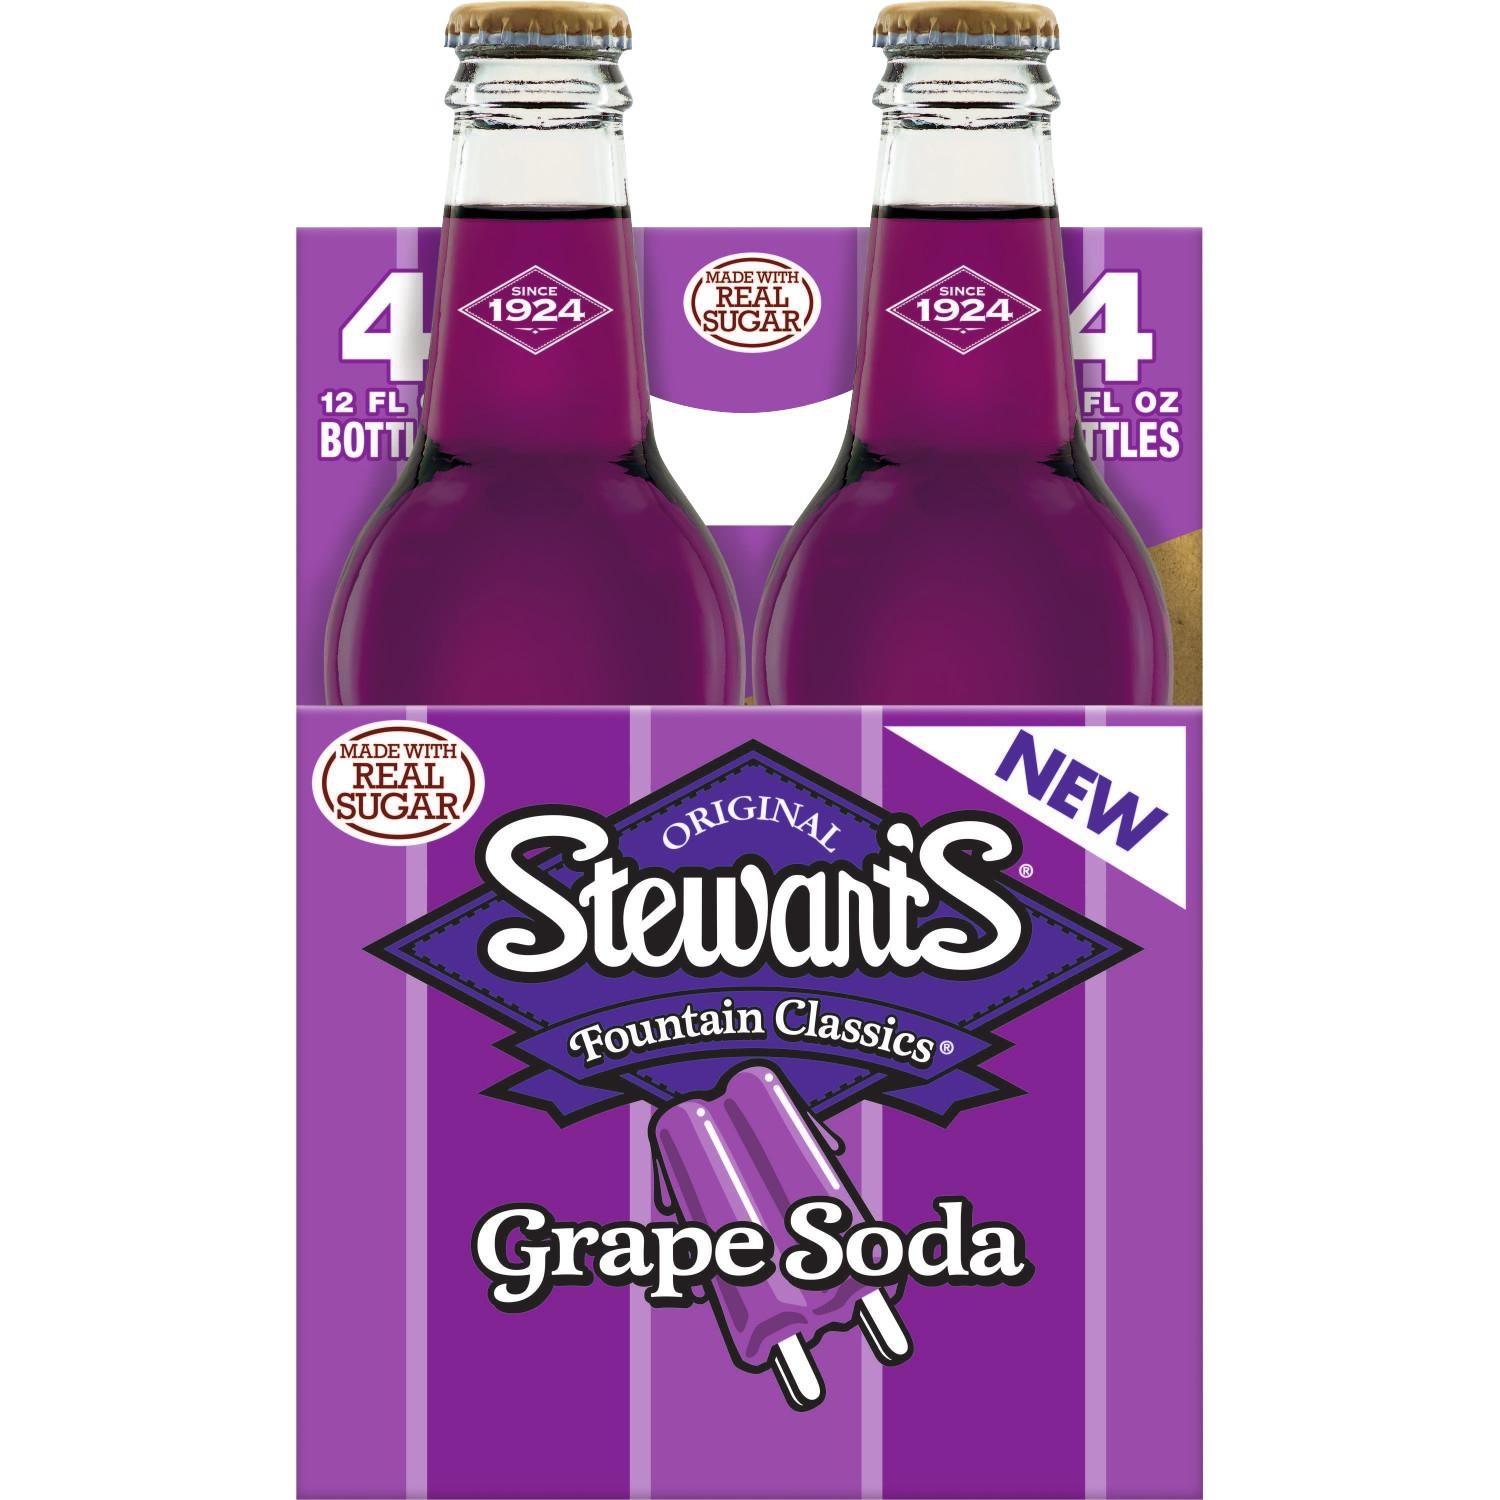 Stewart's Original Fountain Classics Grape Soda, 12 Fl. Oz., 4 Count